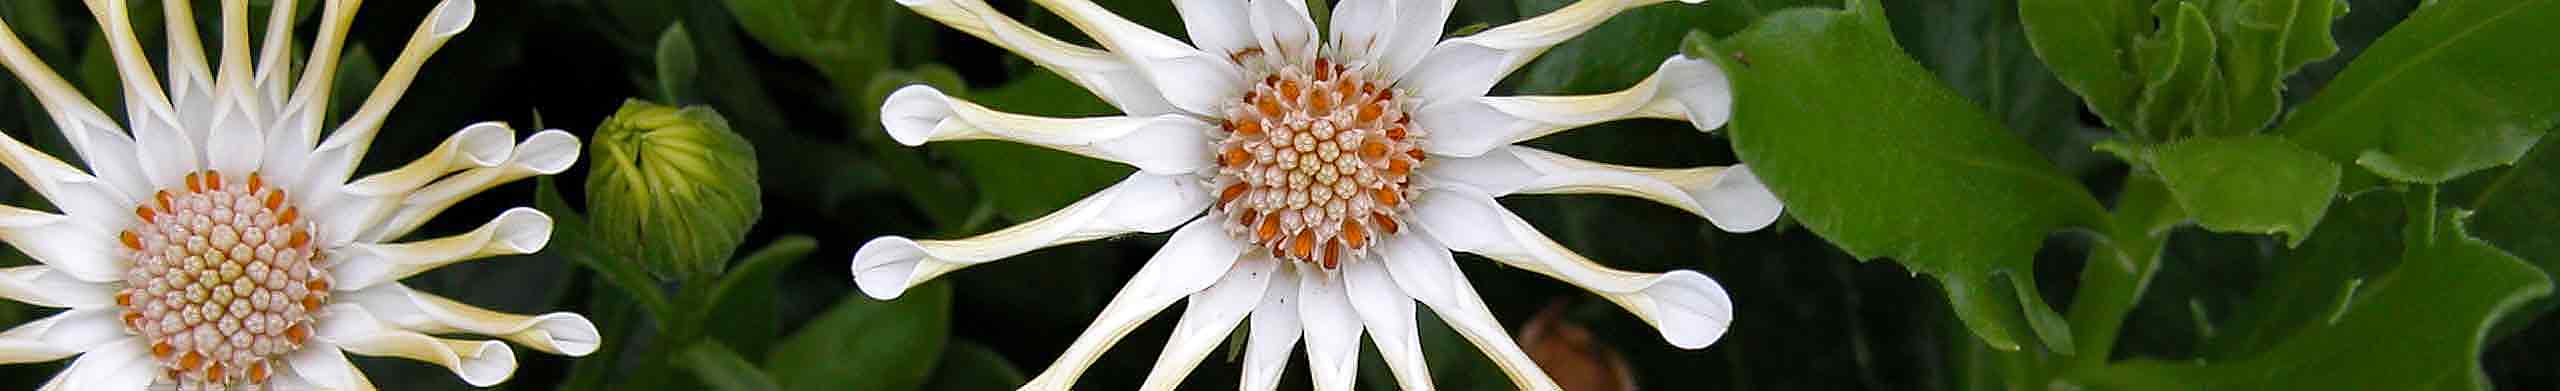 Striking osteospermum ‘Nasinga Cream’ pinwheel-like flowers with their white, spoon-shaped petals radiating from a gold center.